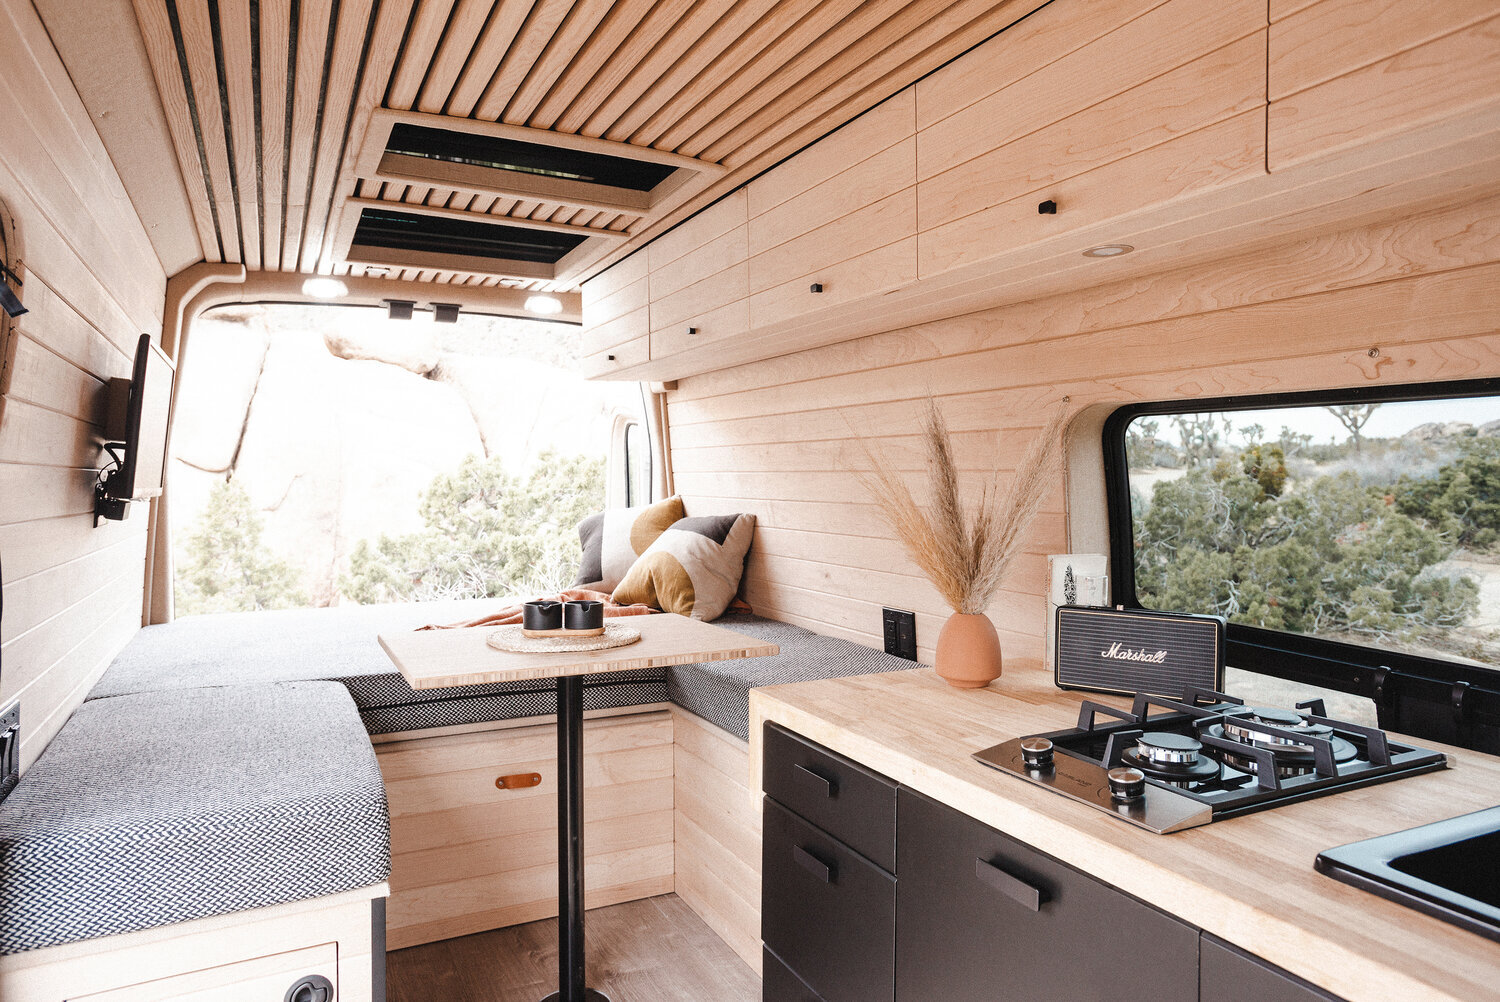 s-california-classic-18-ford-transit-campervan-camper-cartel-high-roof-interior.jpg